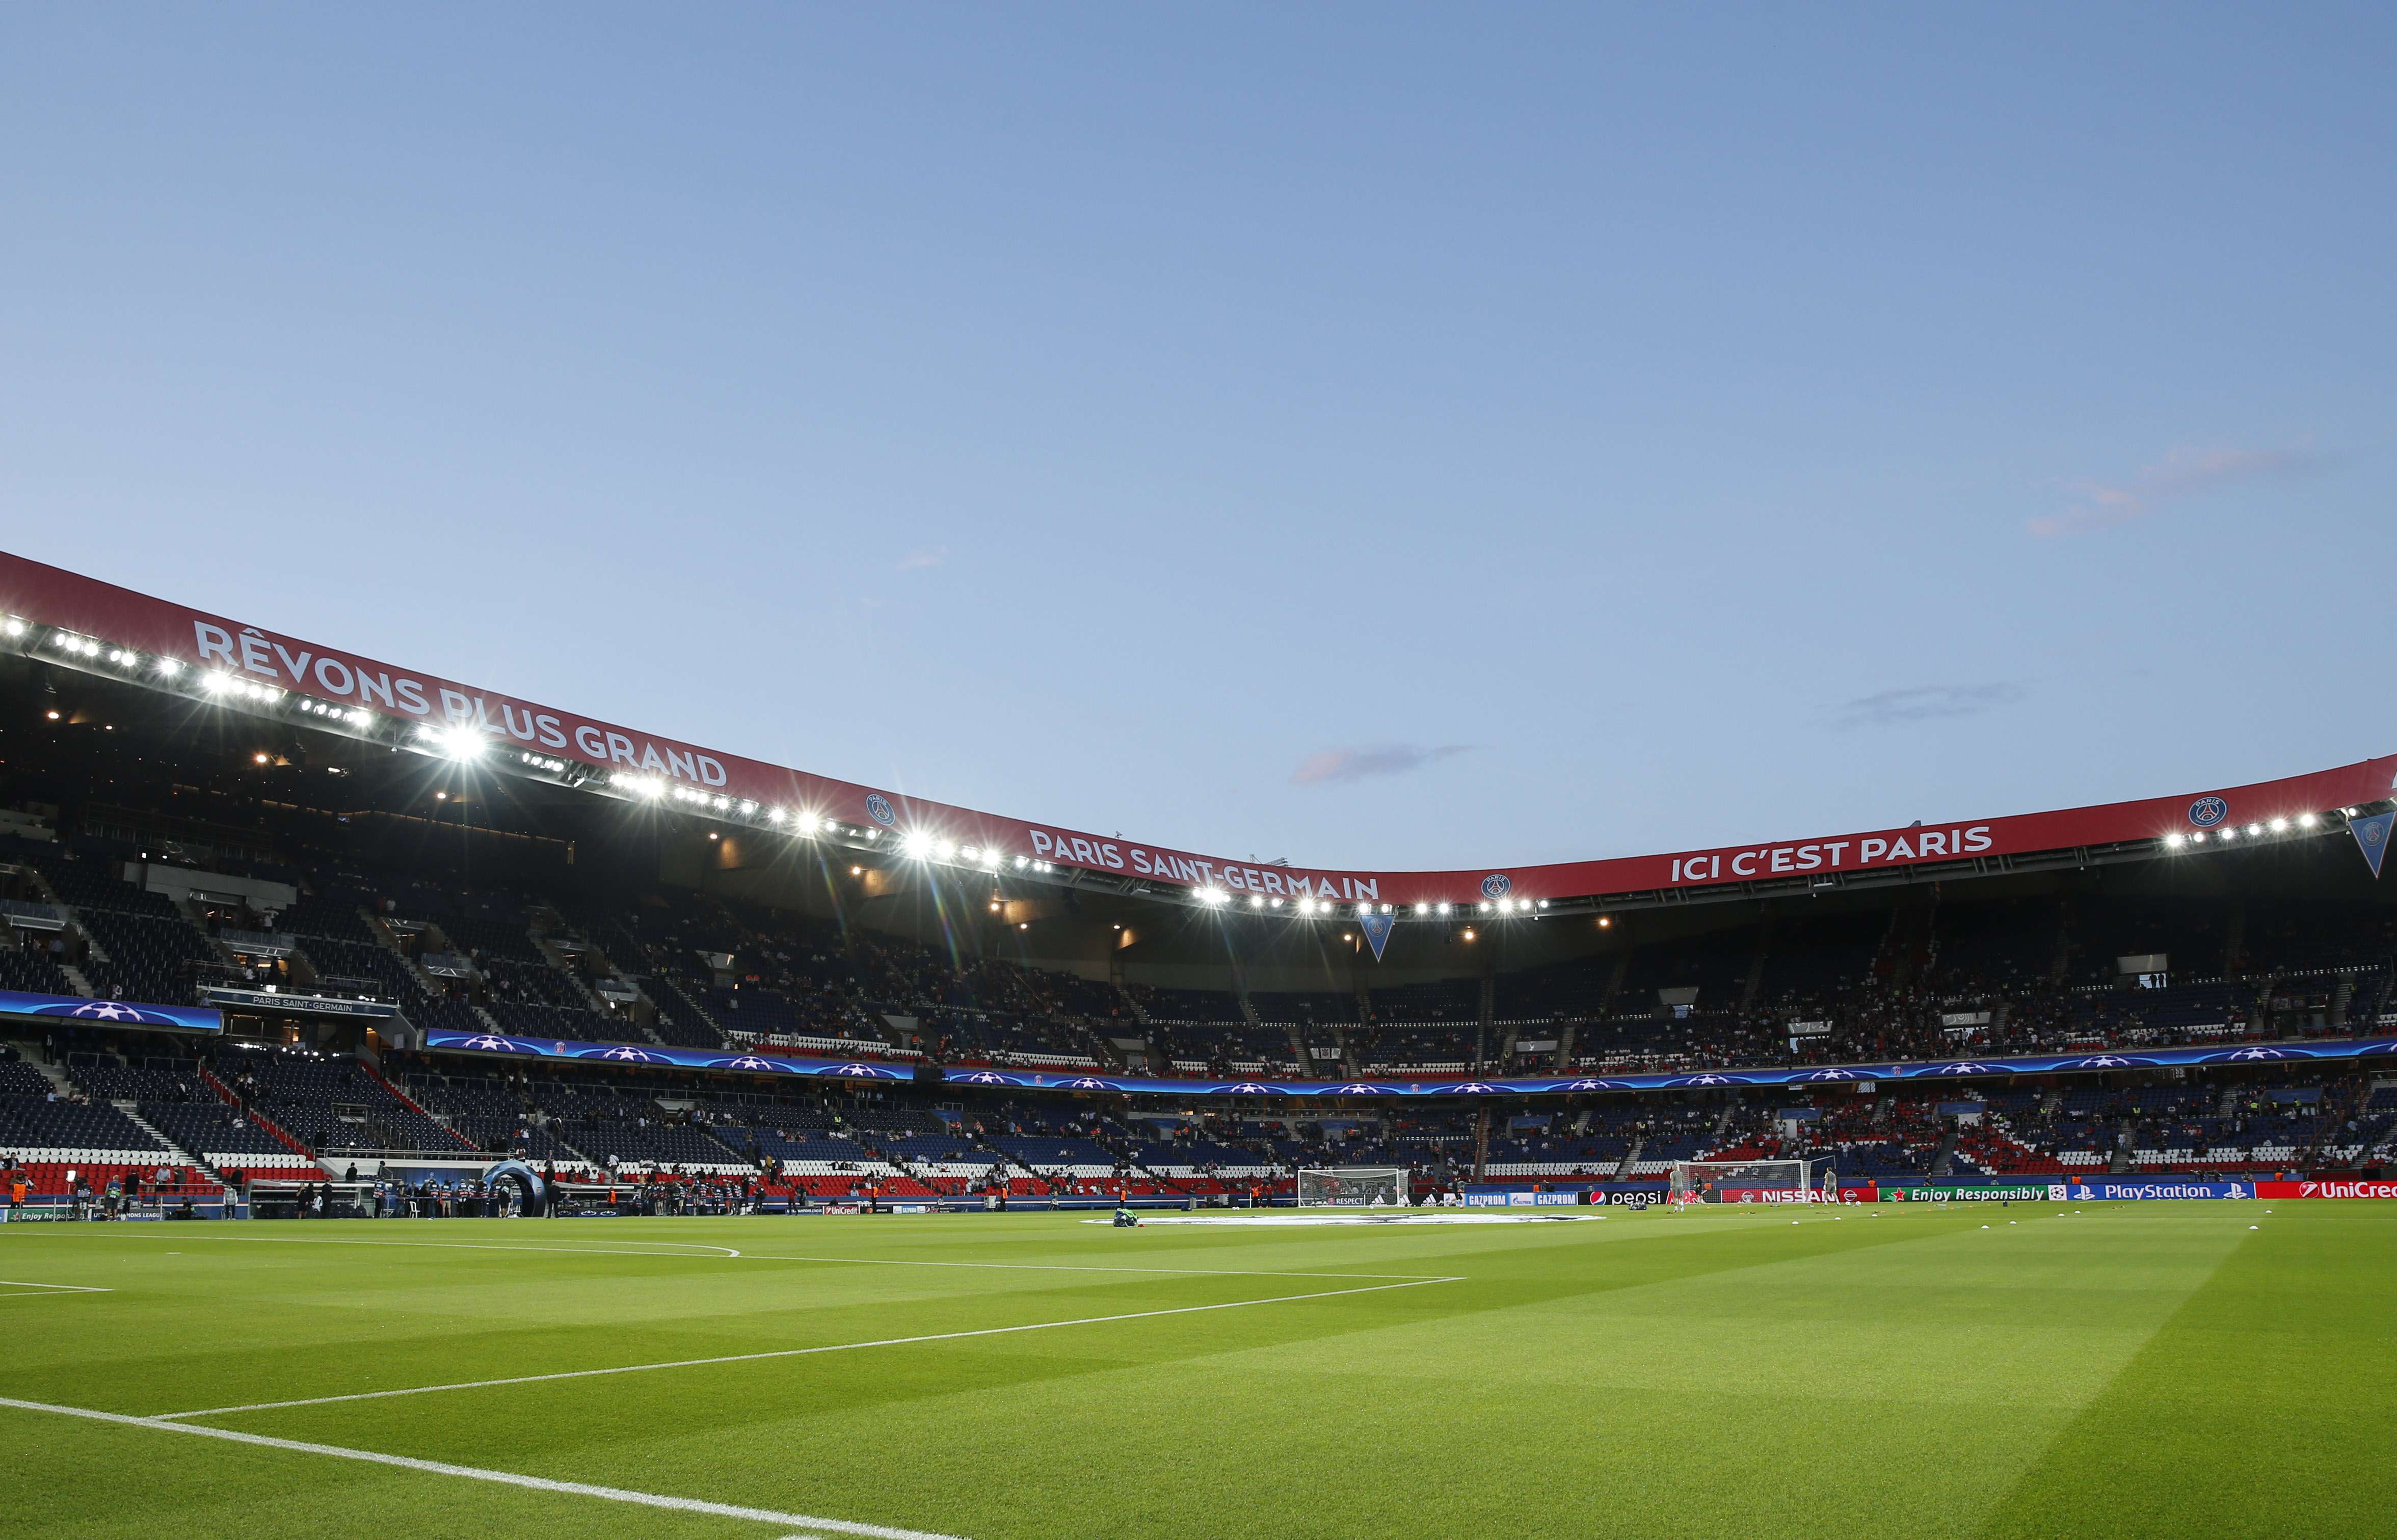 Ligue 1 Football Stadiums